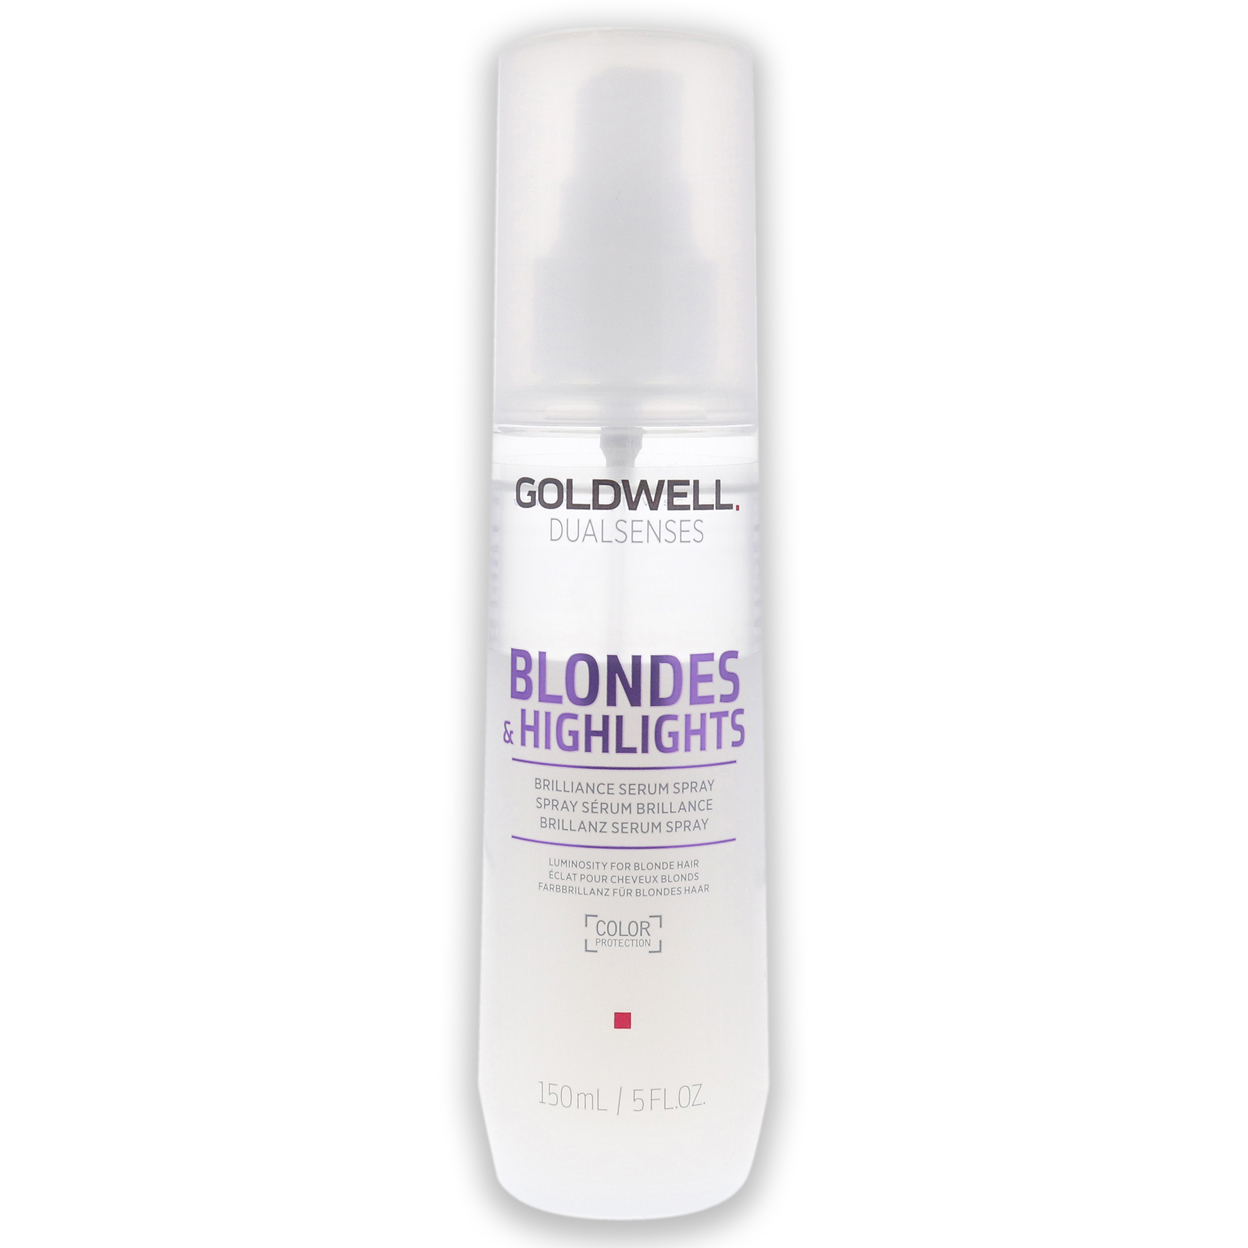 Goldwell Dualsenses Blondes Highlights Brillance Serum Spray Serum 5 Oz